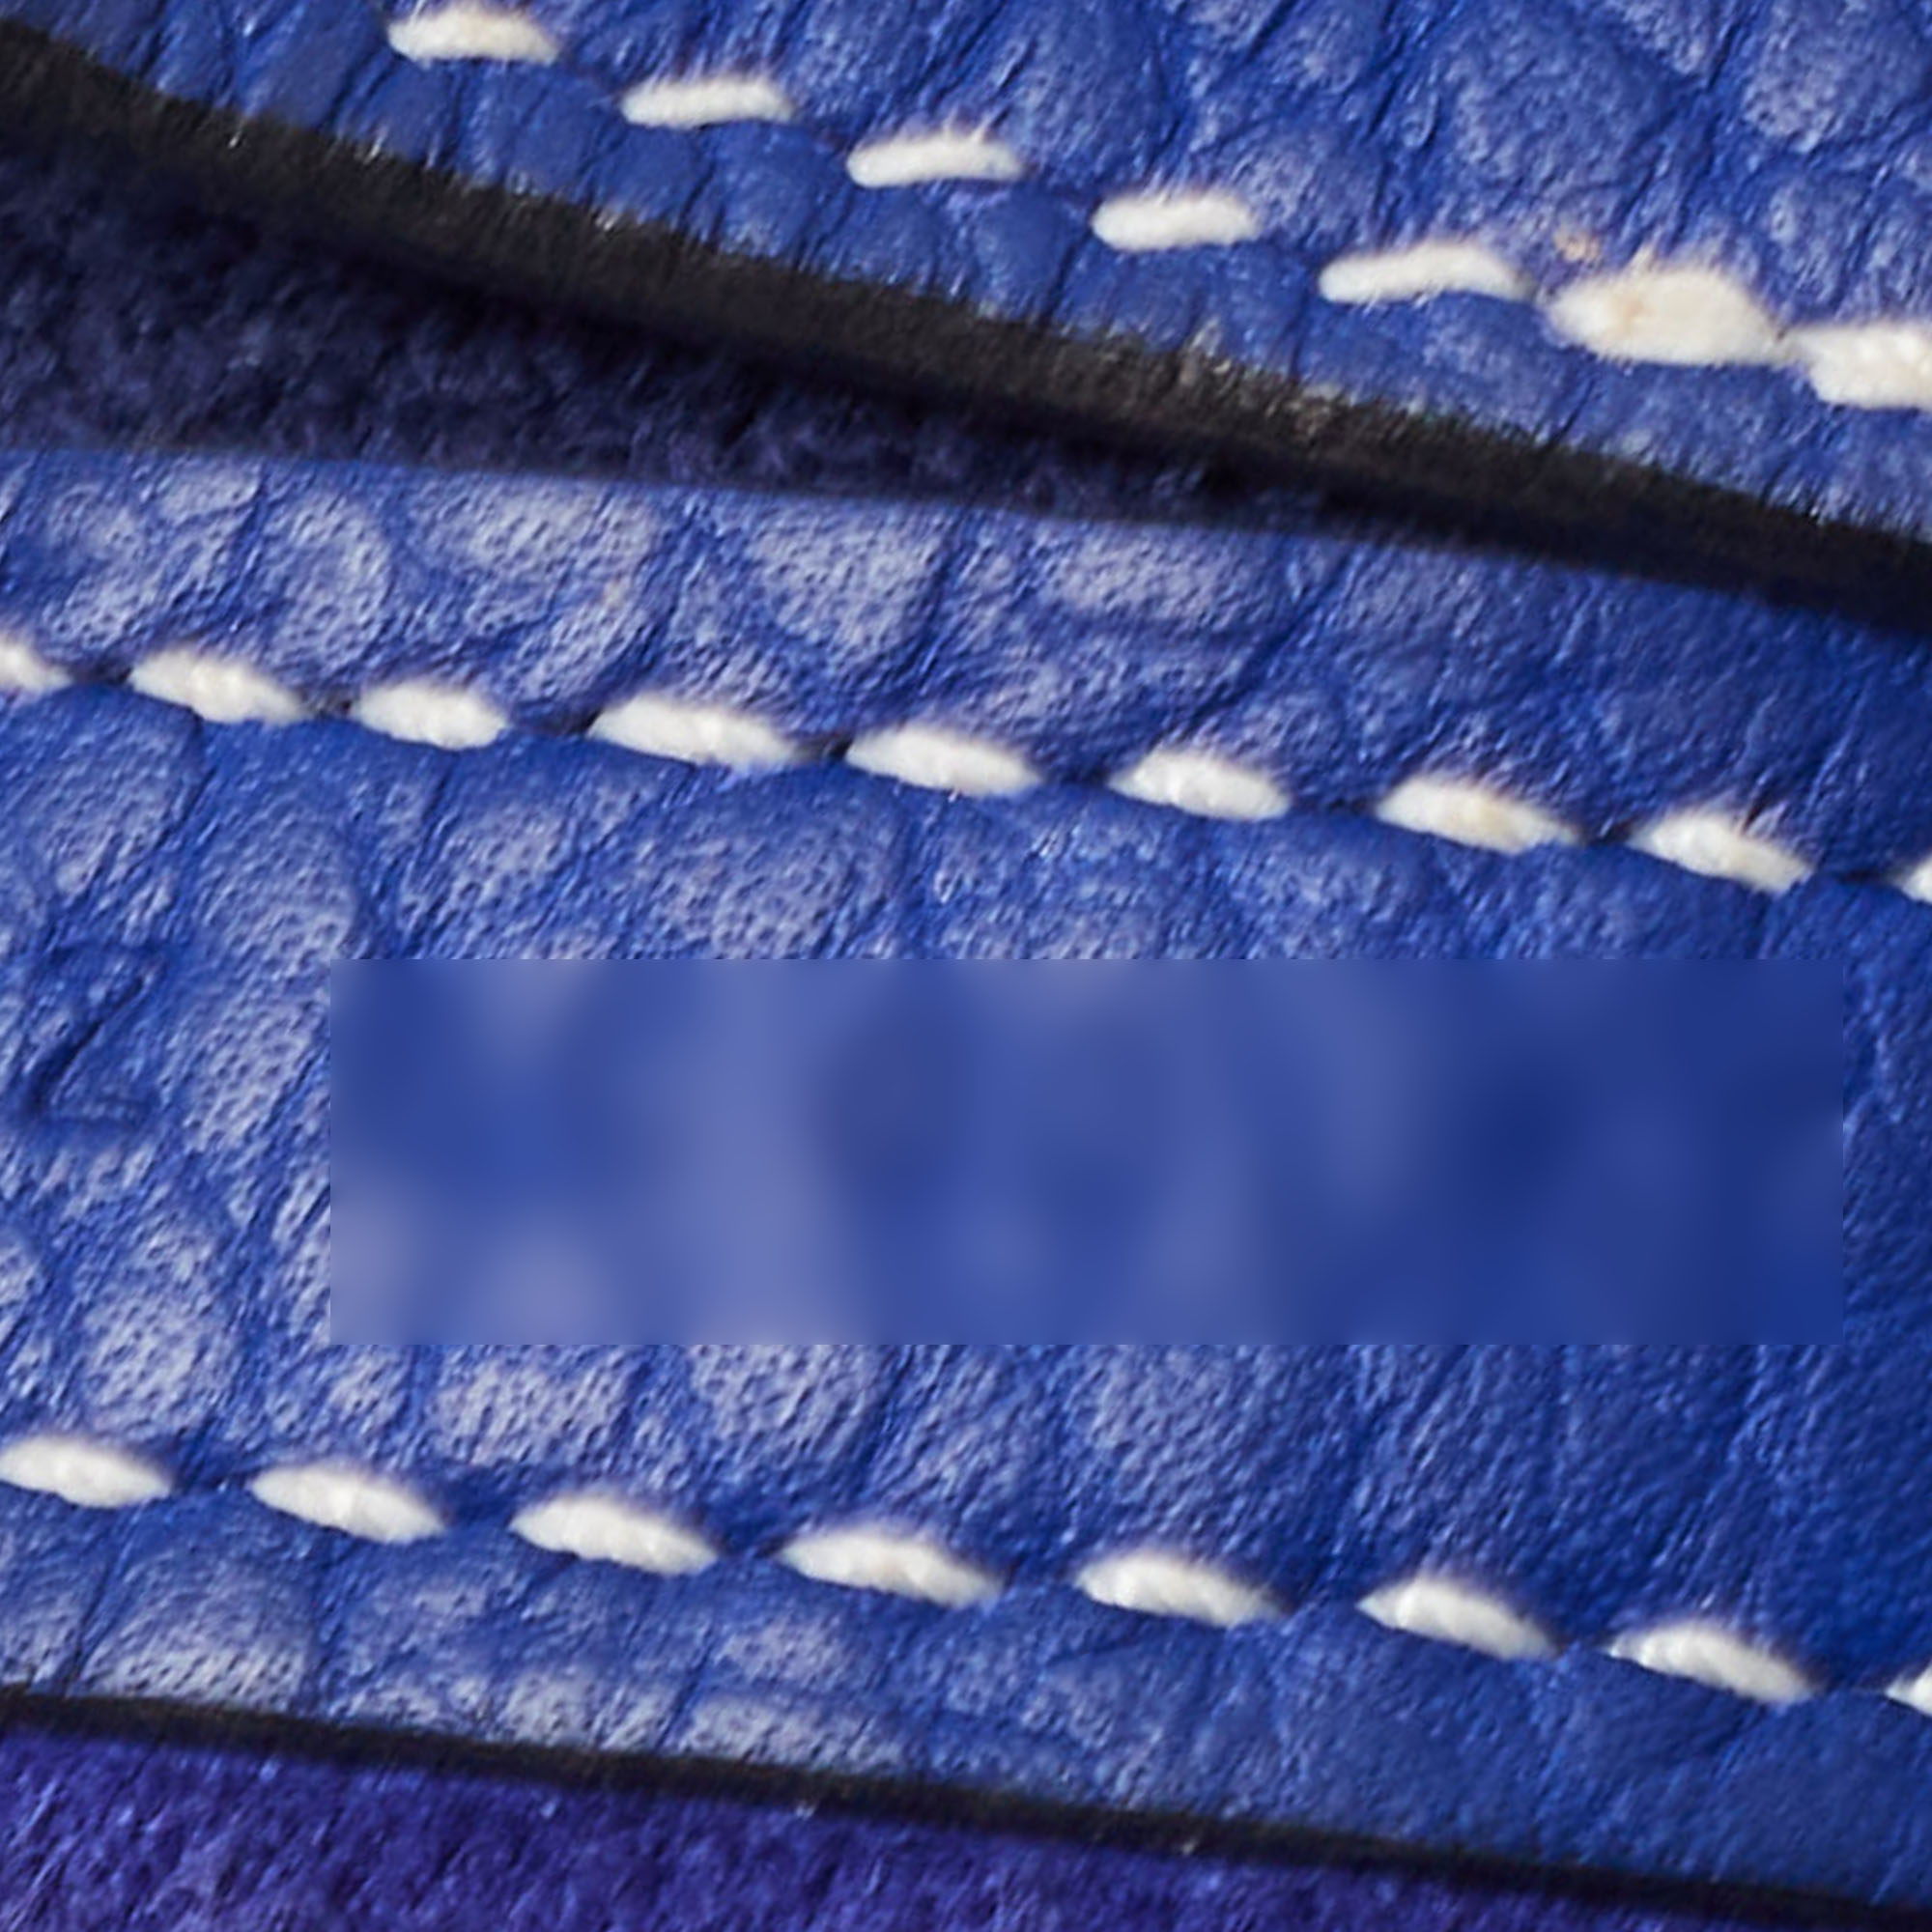 Hermes Bleu Encre/Bleu Electrique Clemence Leather Picotin Lock 18 Bag